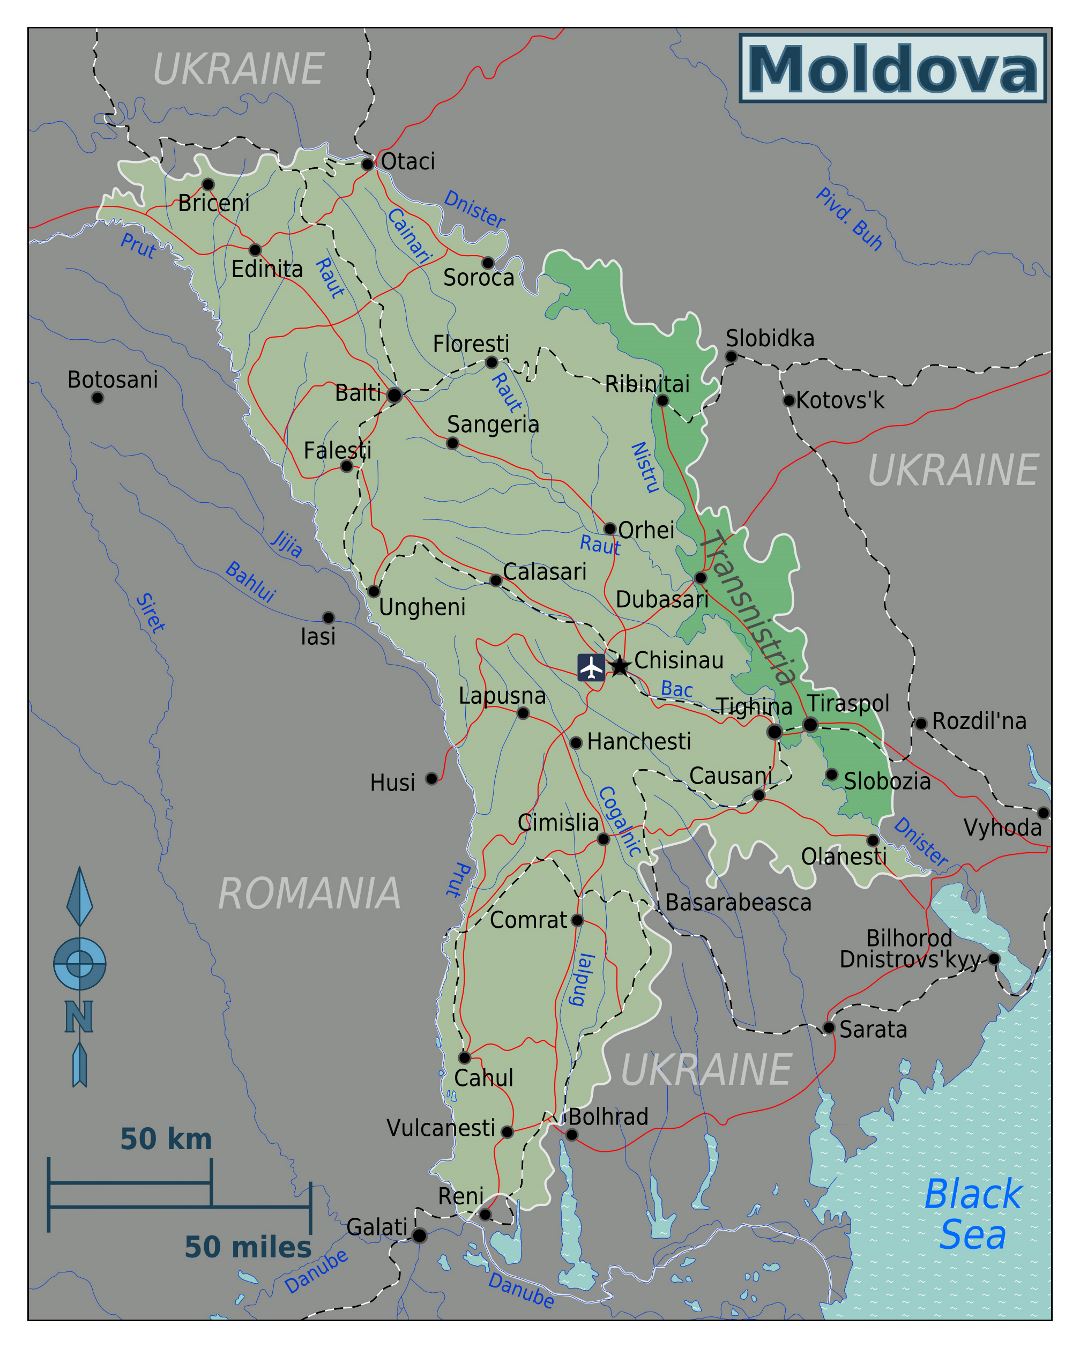 Large regions map of Moldova